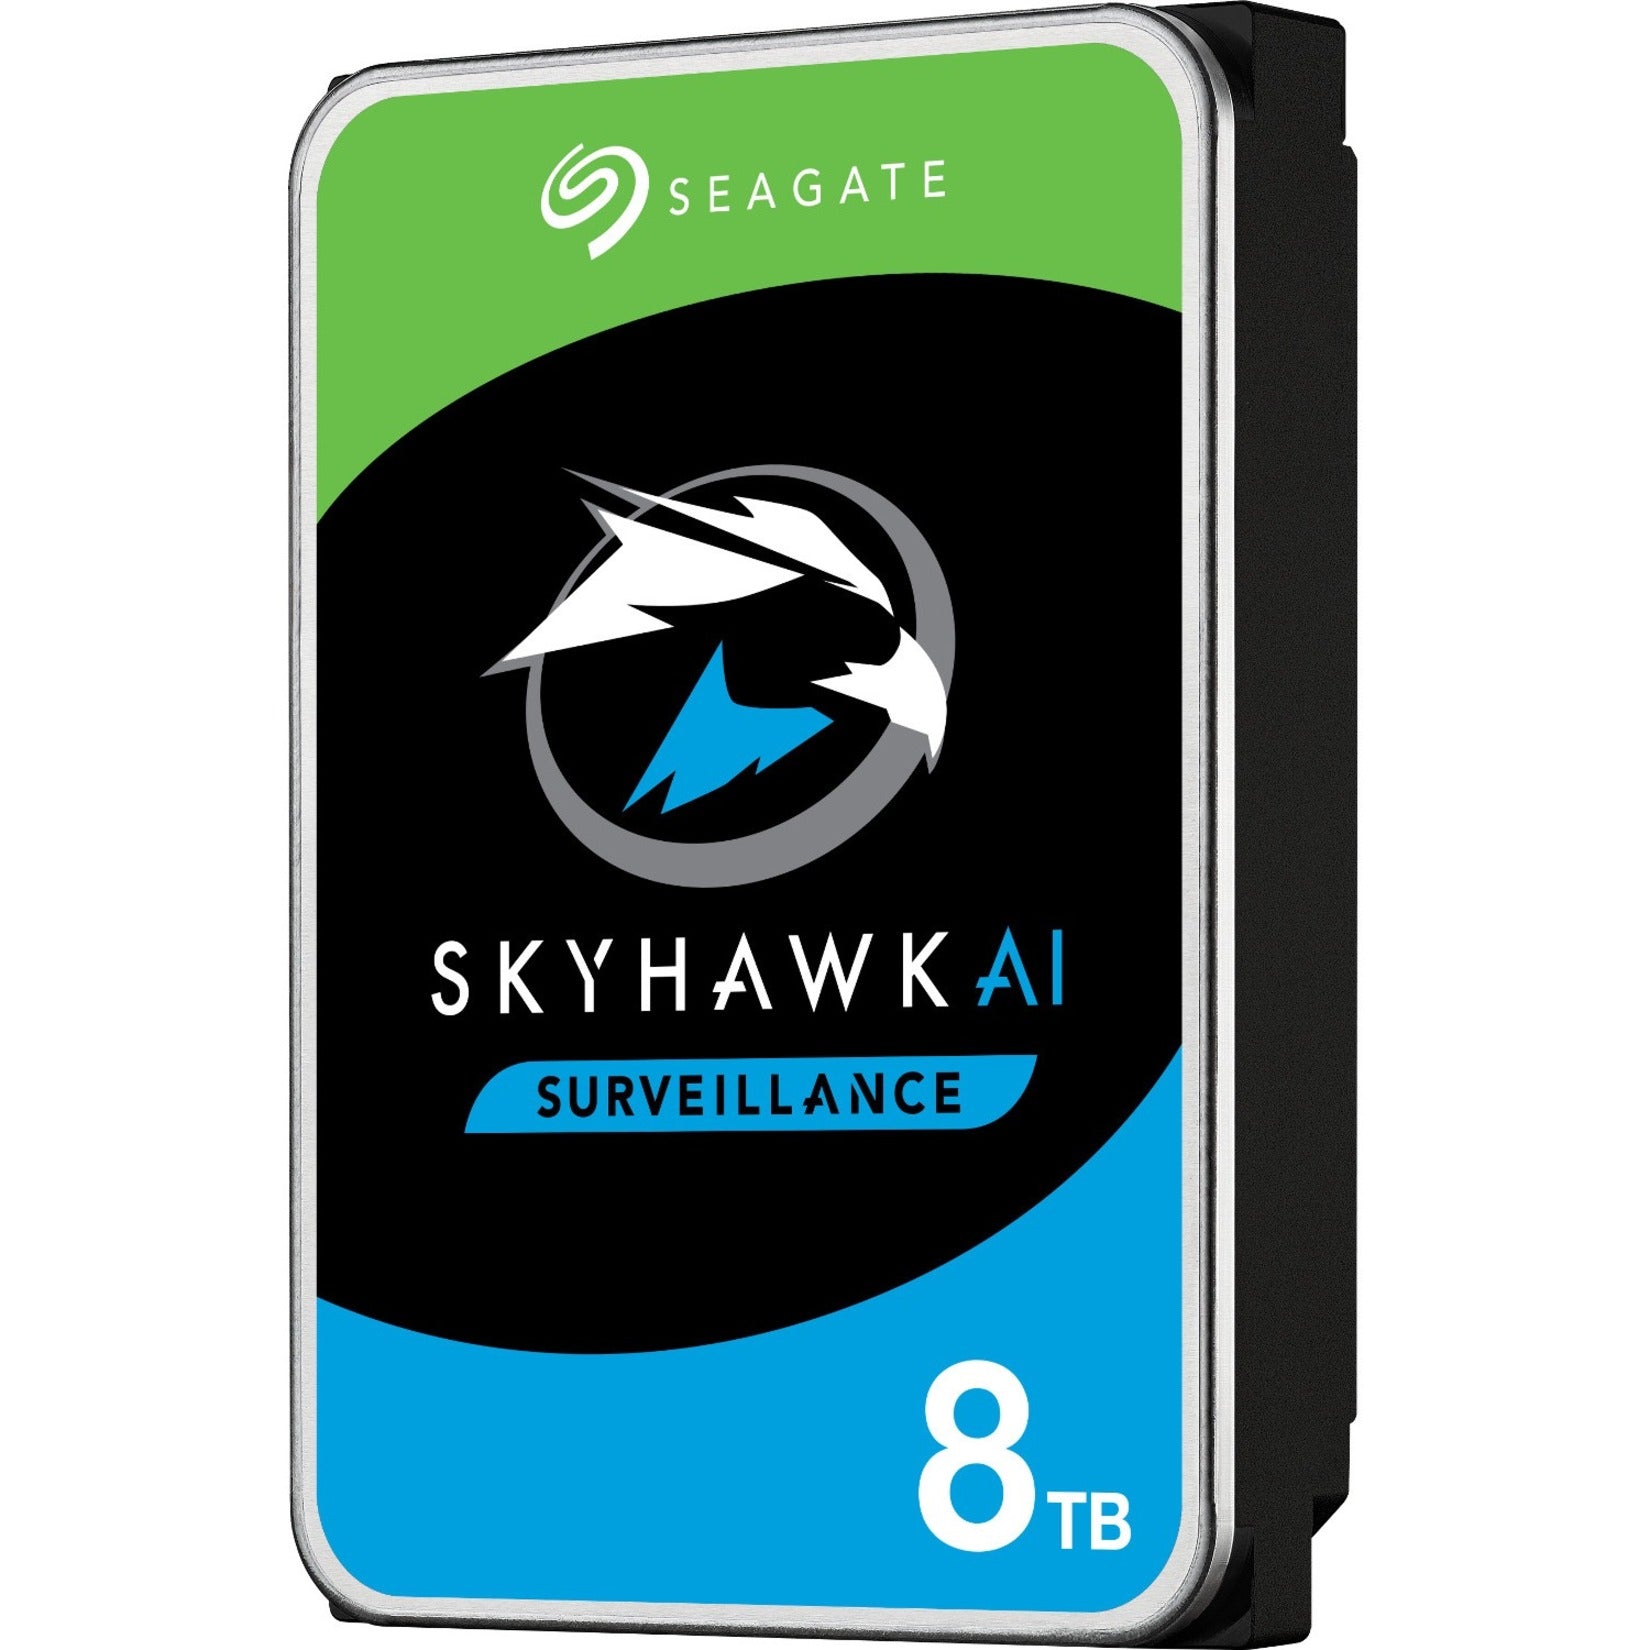 Seagate ST8000VE001 SkyHawk AI 8TB Hard Drive 24x7 surveillance storage.